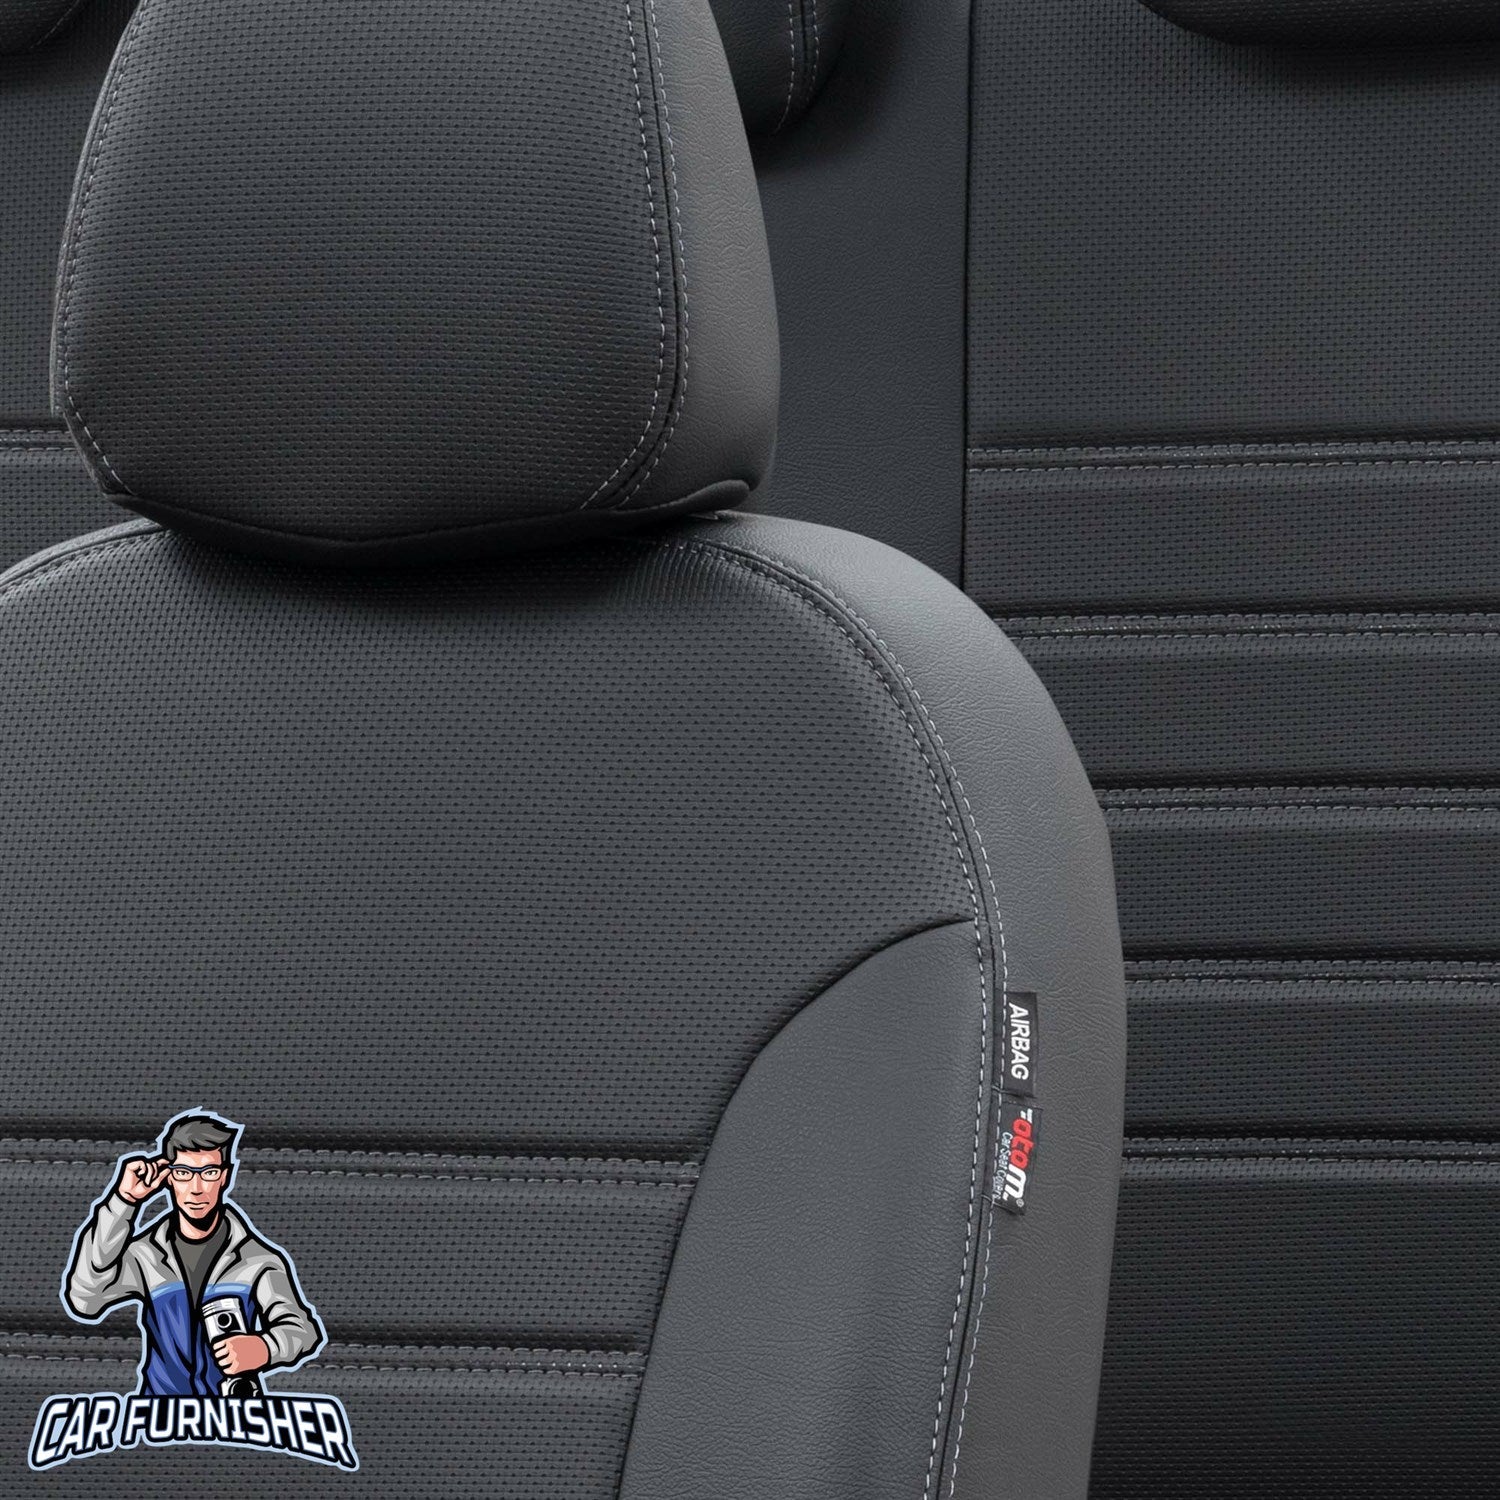 Mitsubishi L-300 Seat Covers New York Leather Design Black Leather